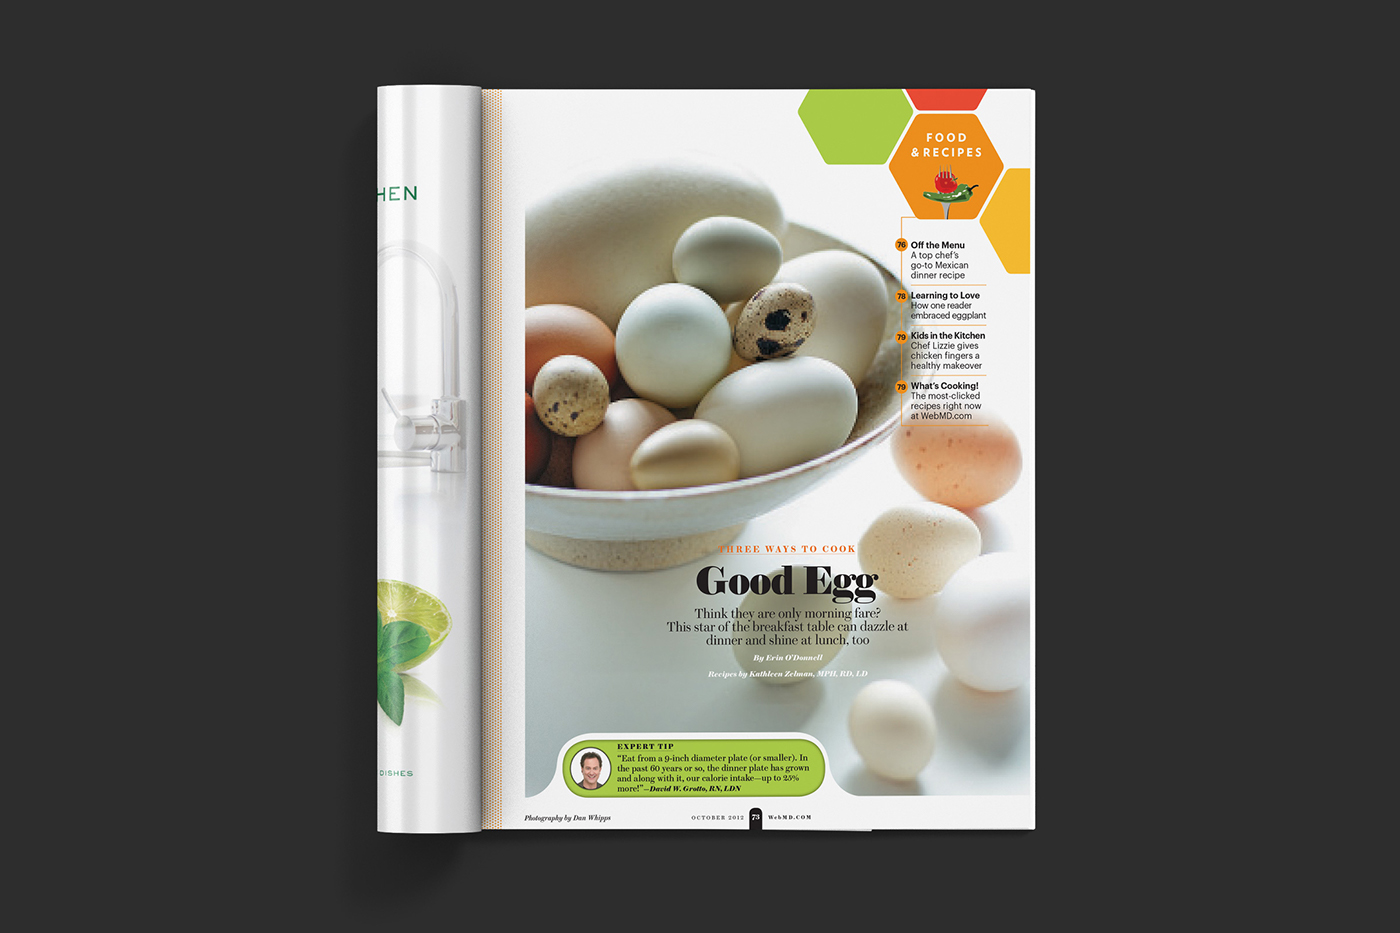 webmd magazine editorial publication print redesign healthcare lifestyle Custom Publishing branding 